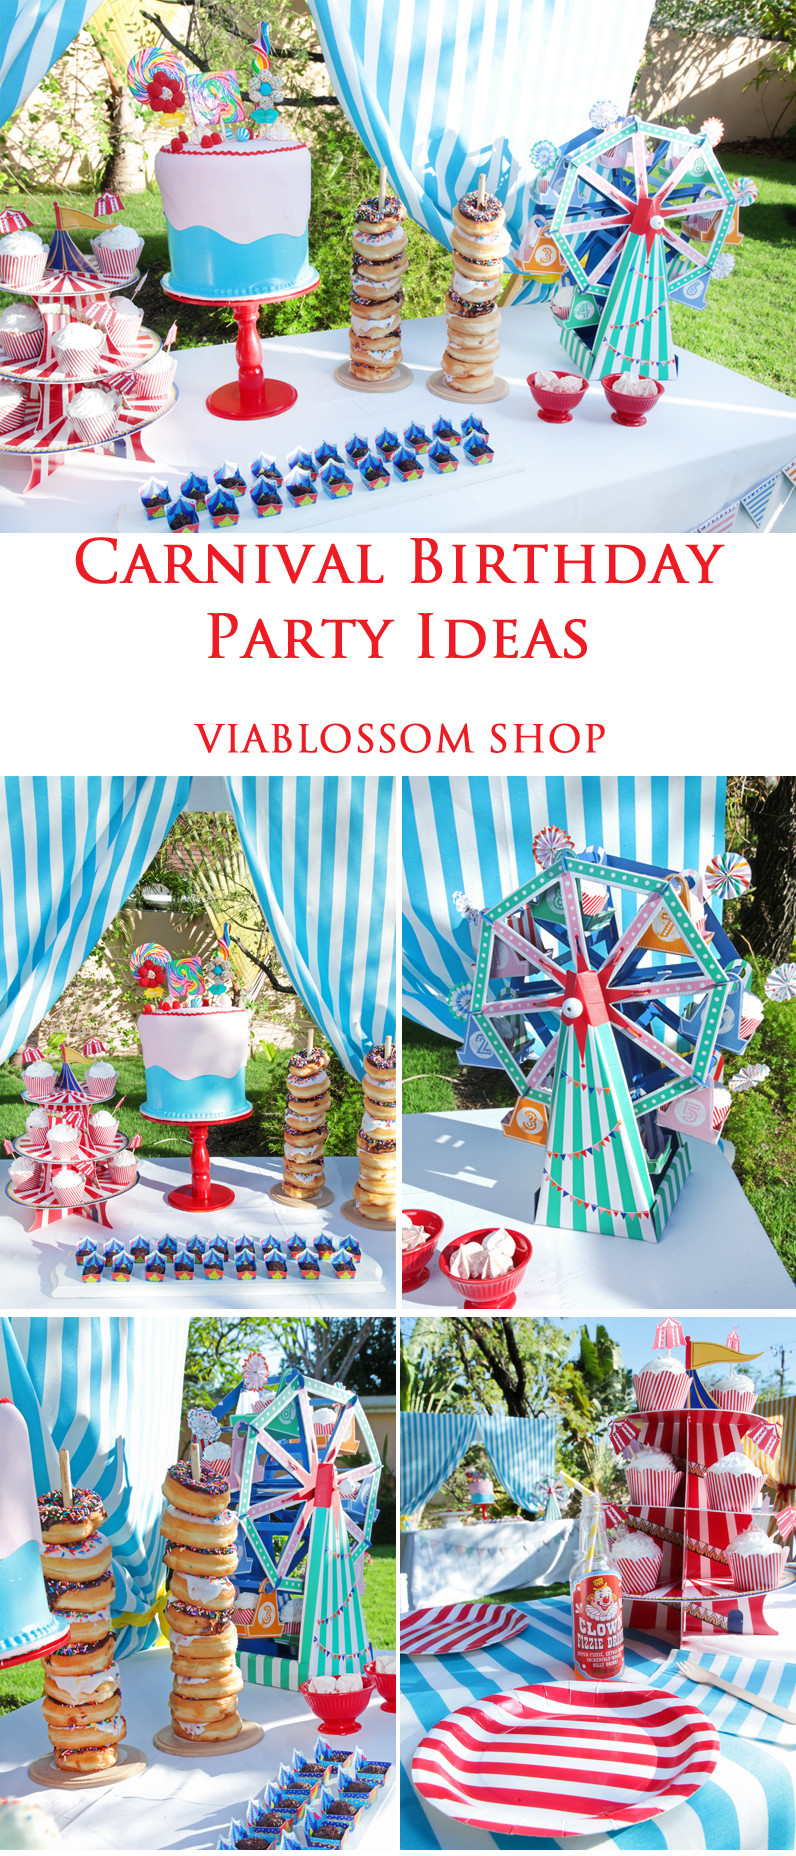 Circus Birthday Party Decorations
 Carnival Birthday Party Via Blossom